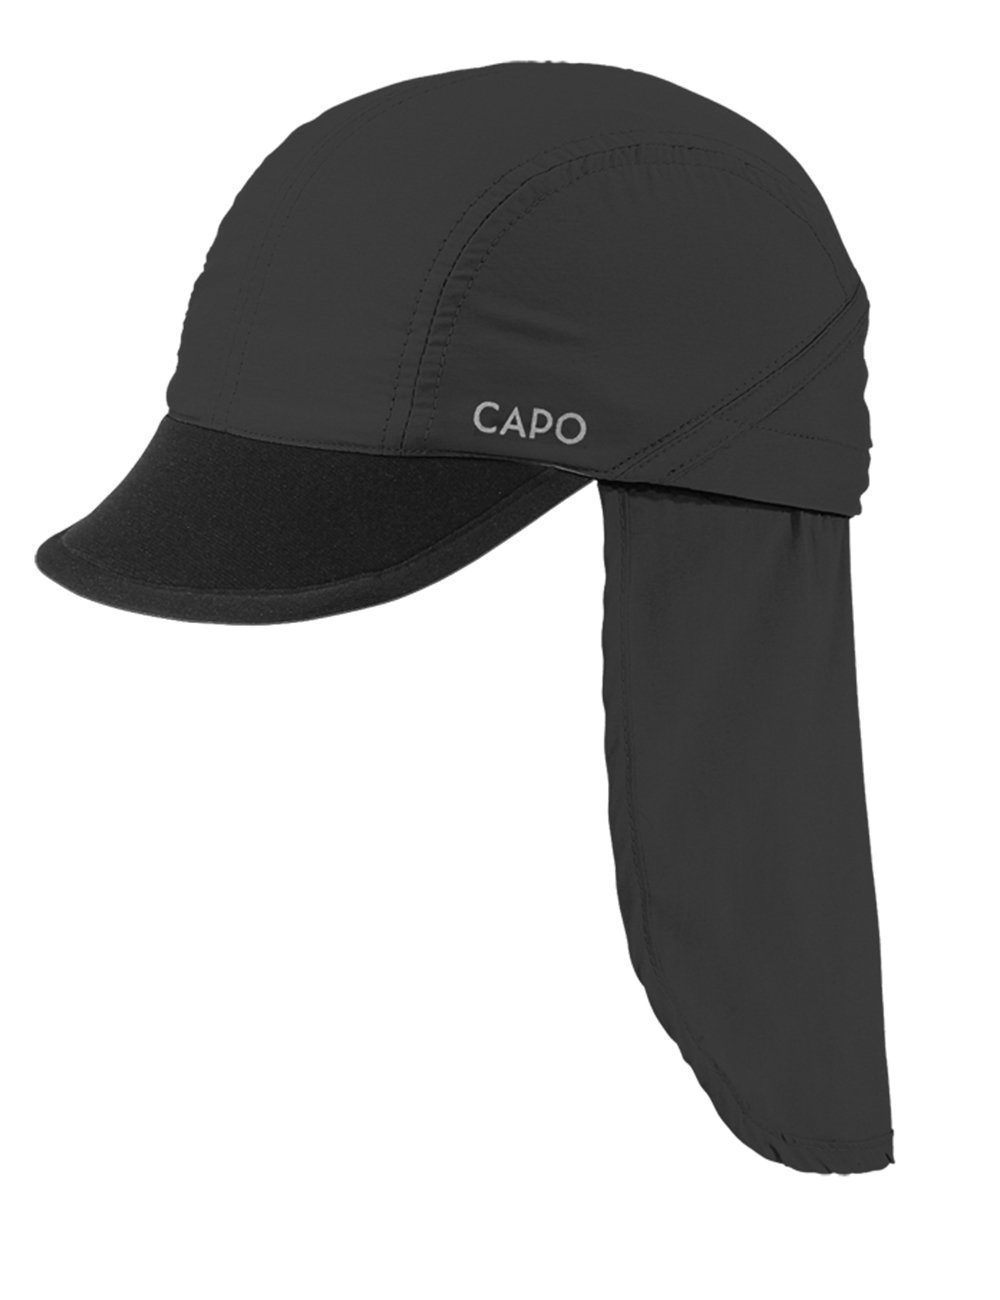 CAPO-LIGHT CAPO Europe CAP PROTECTION Made VELCRO Schirmmütze NECK in